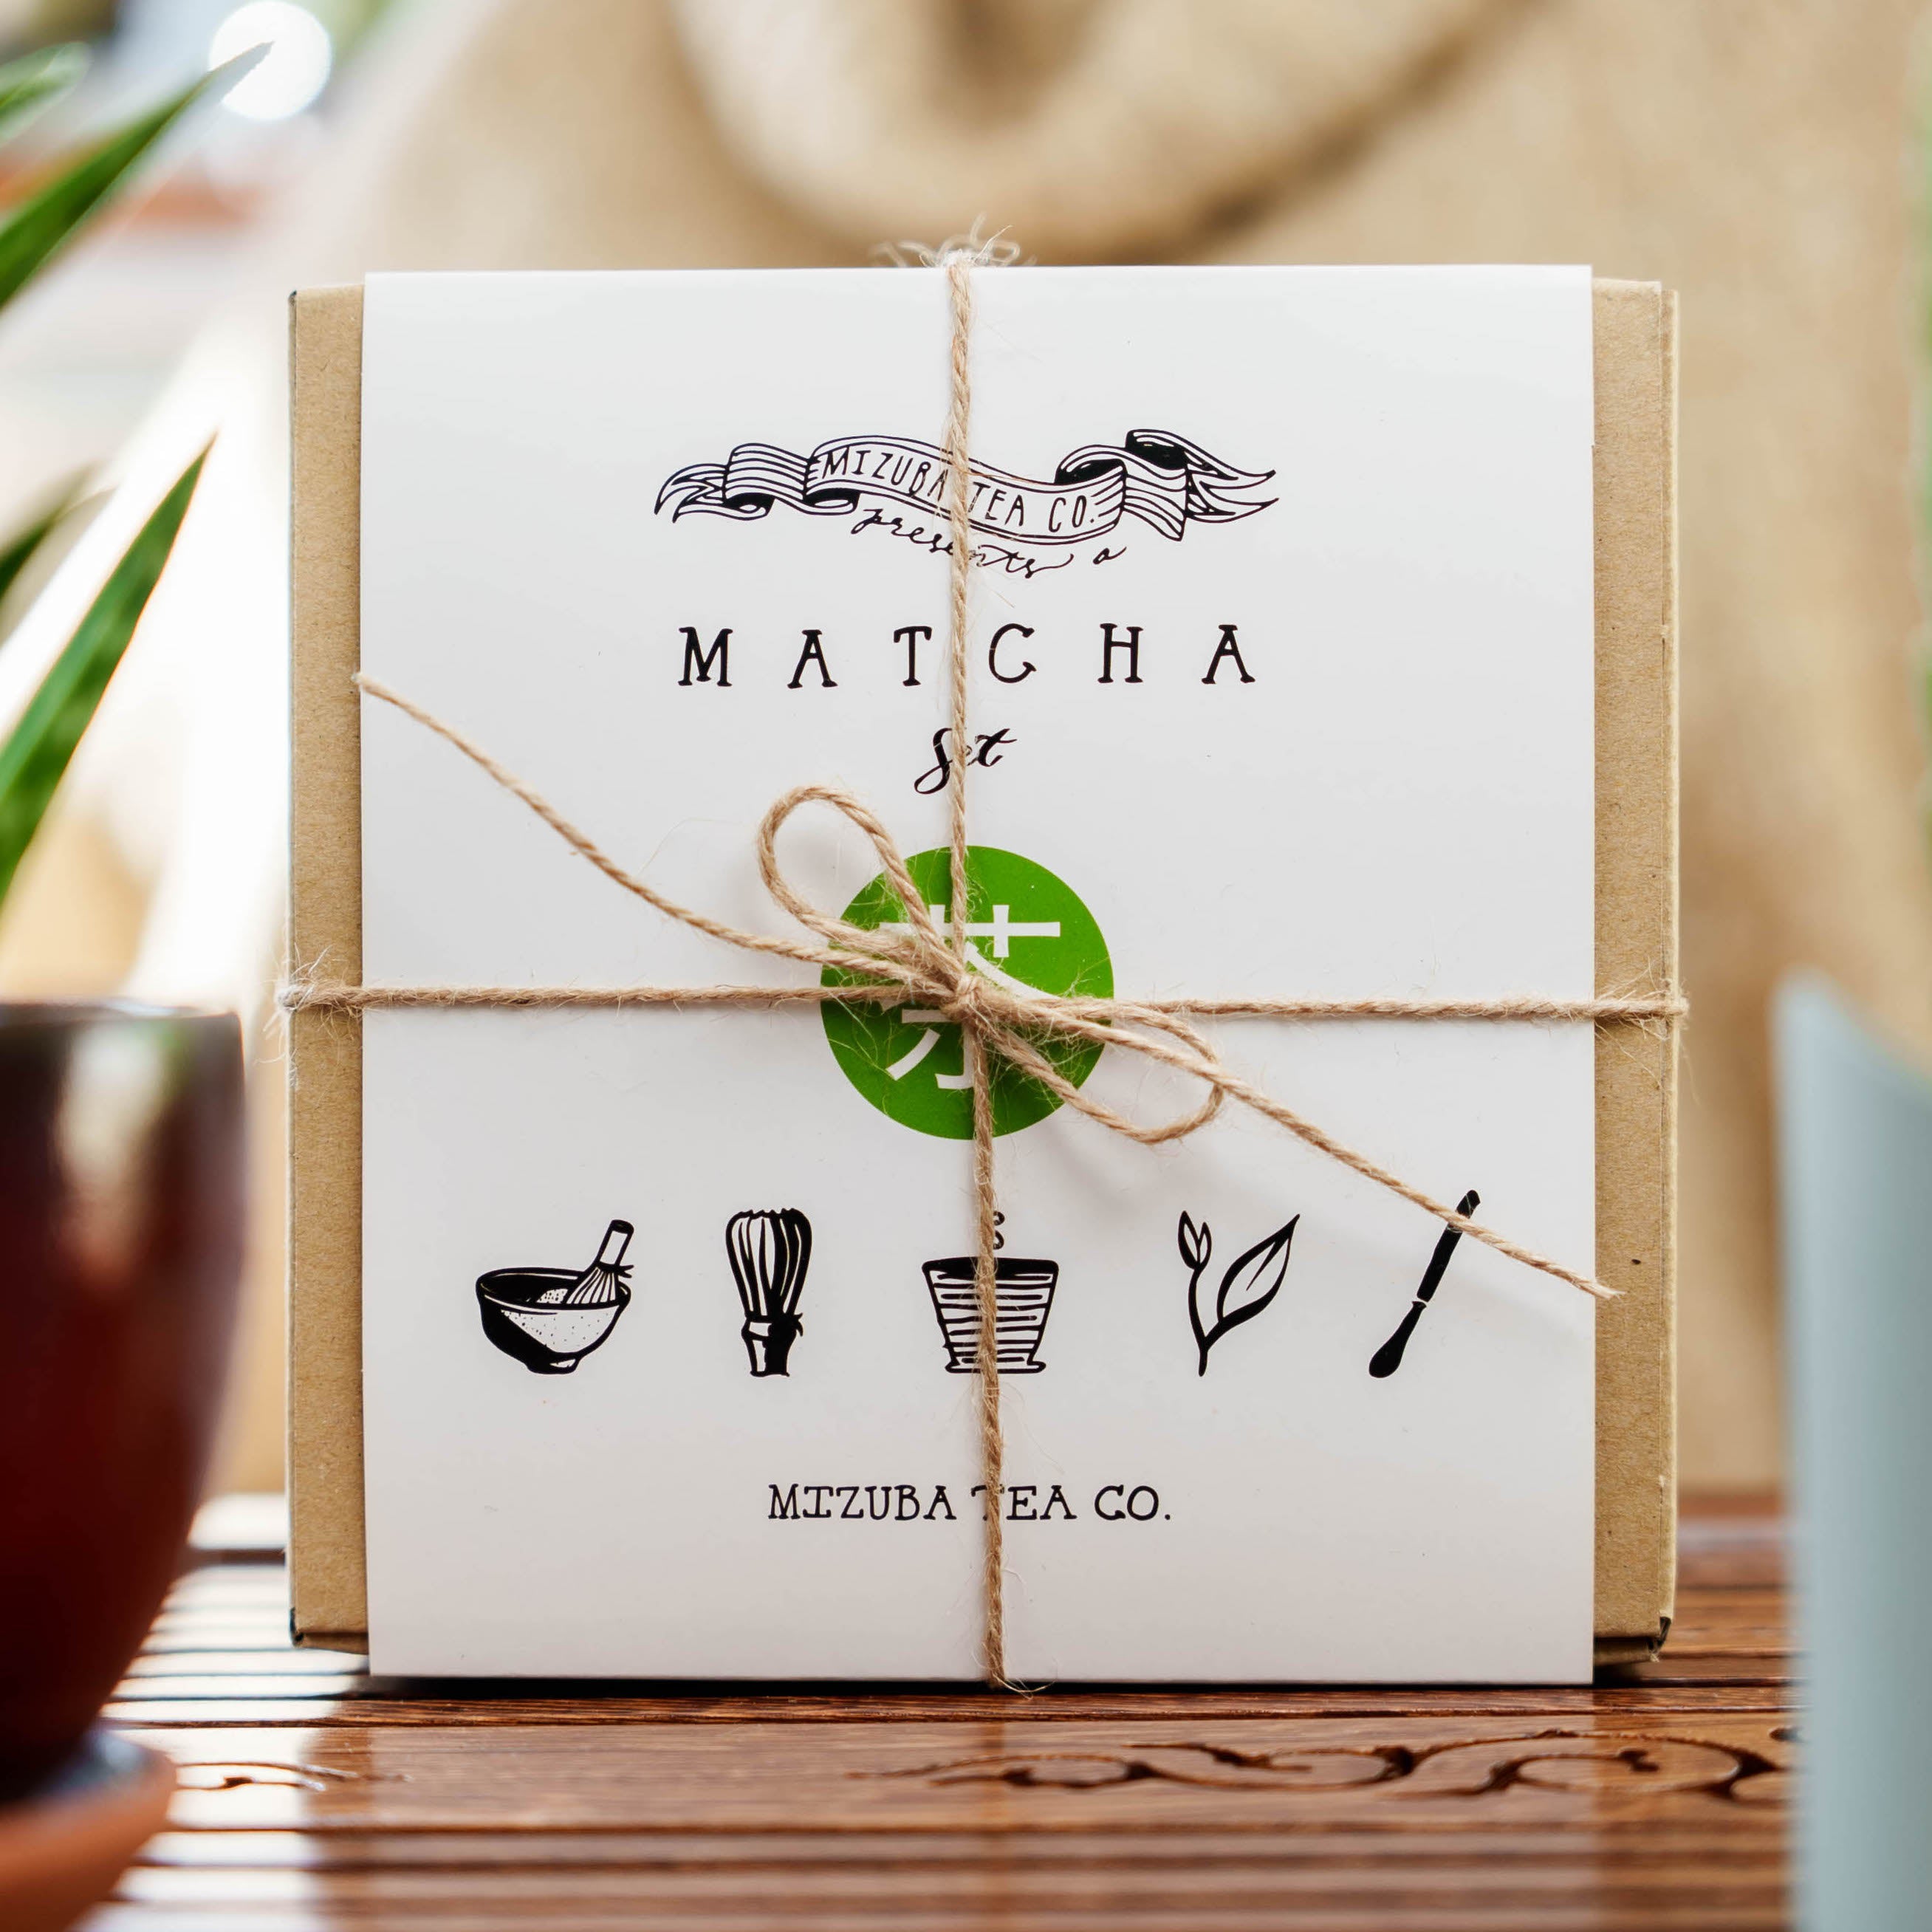  Matcha Xen Flavored Matcha Green Tea Powder Gift Set